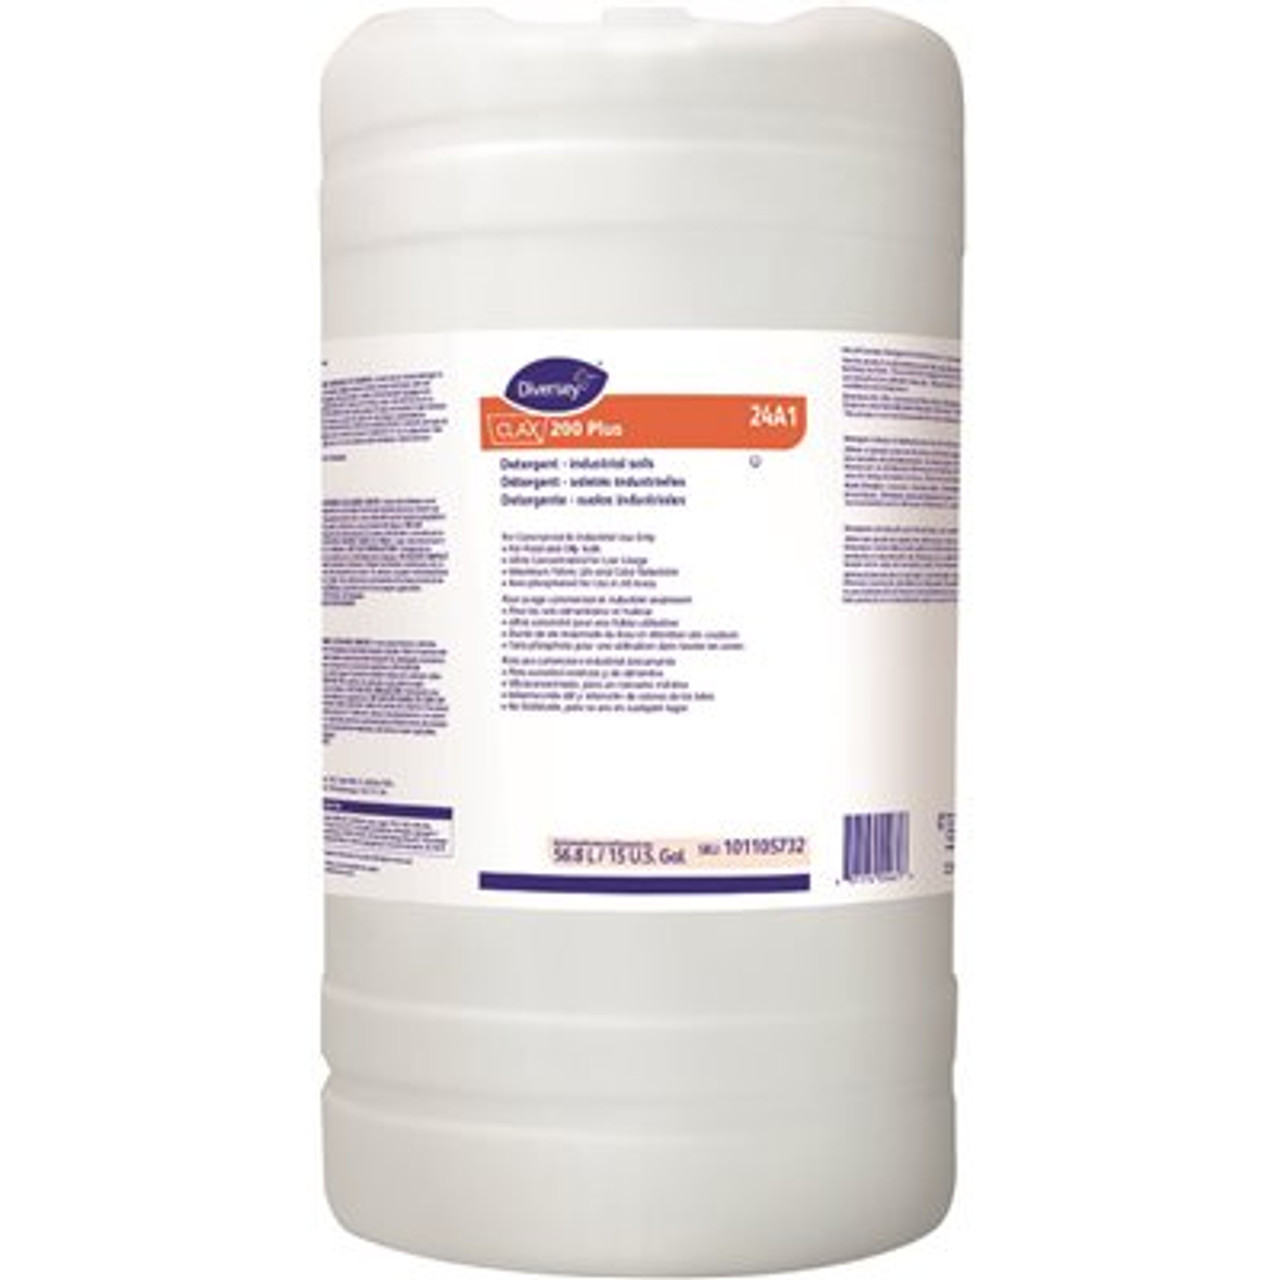 Diversey Clax 200 Plus 15 gal Odorless Liquid Laundry Detergent